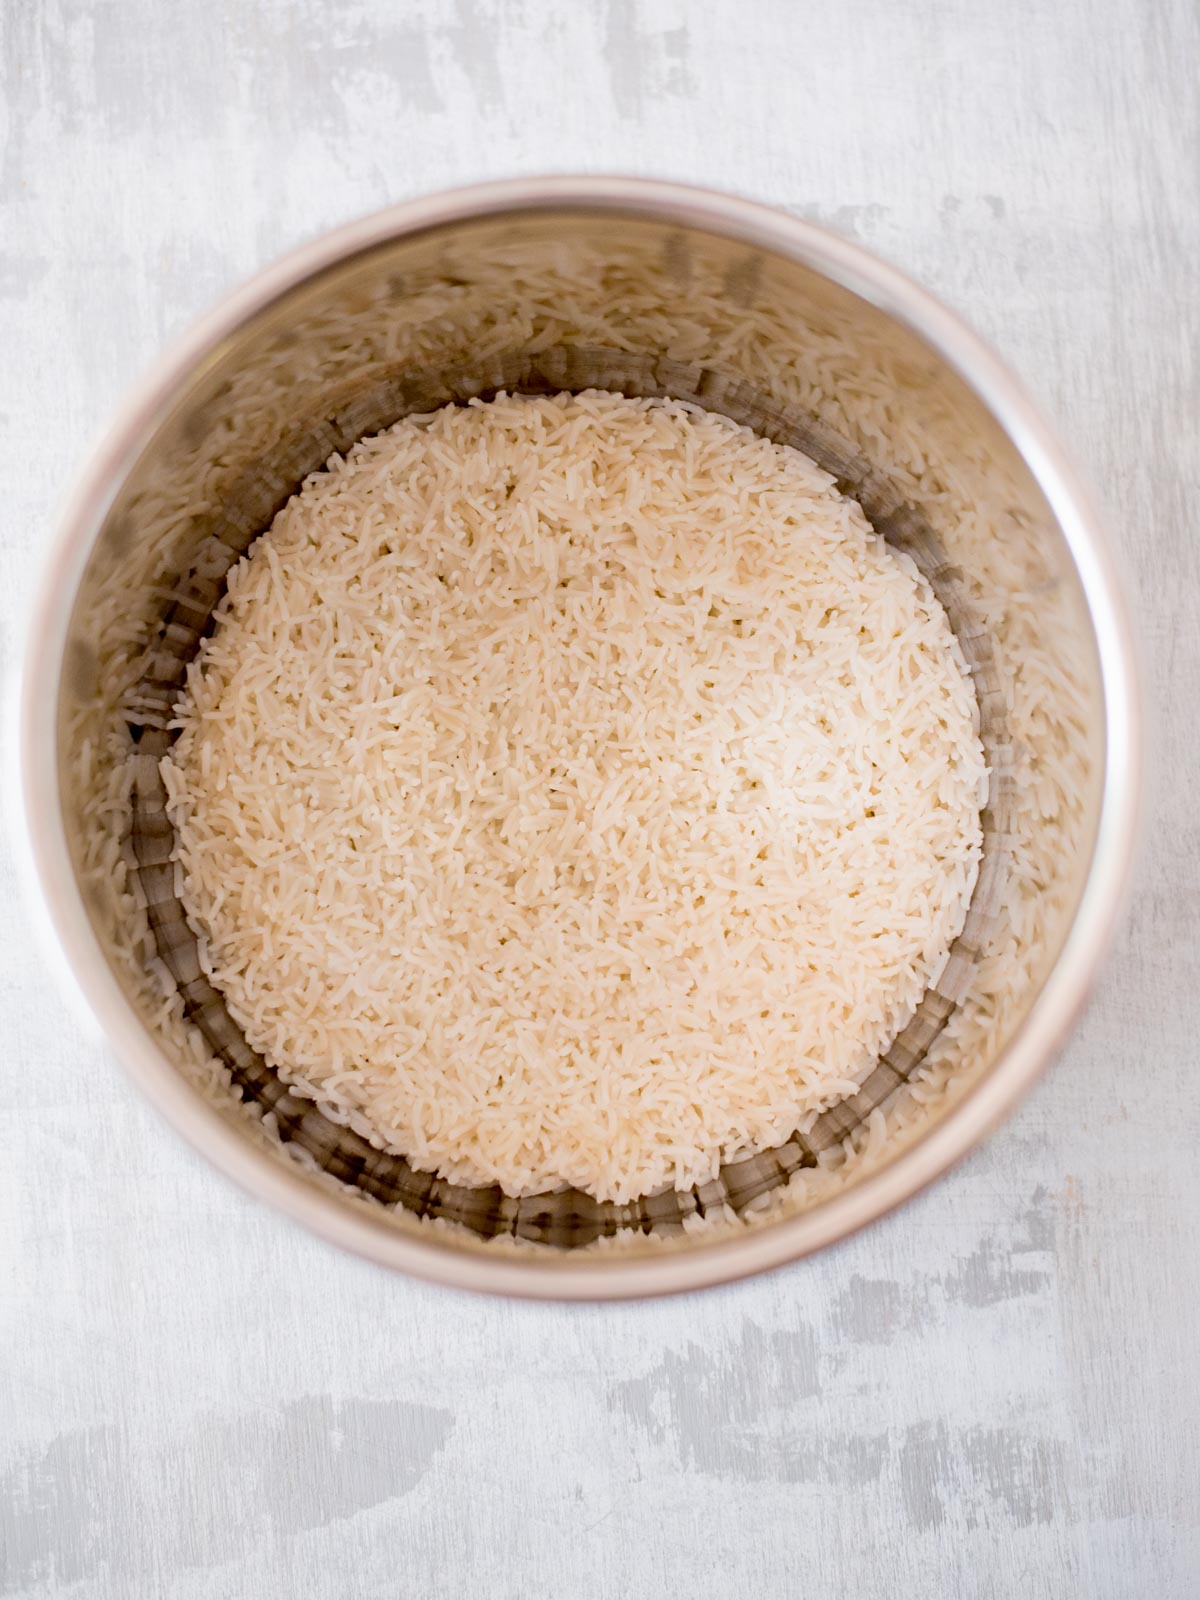 Basmati rice inside the instant pot.